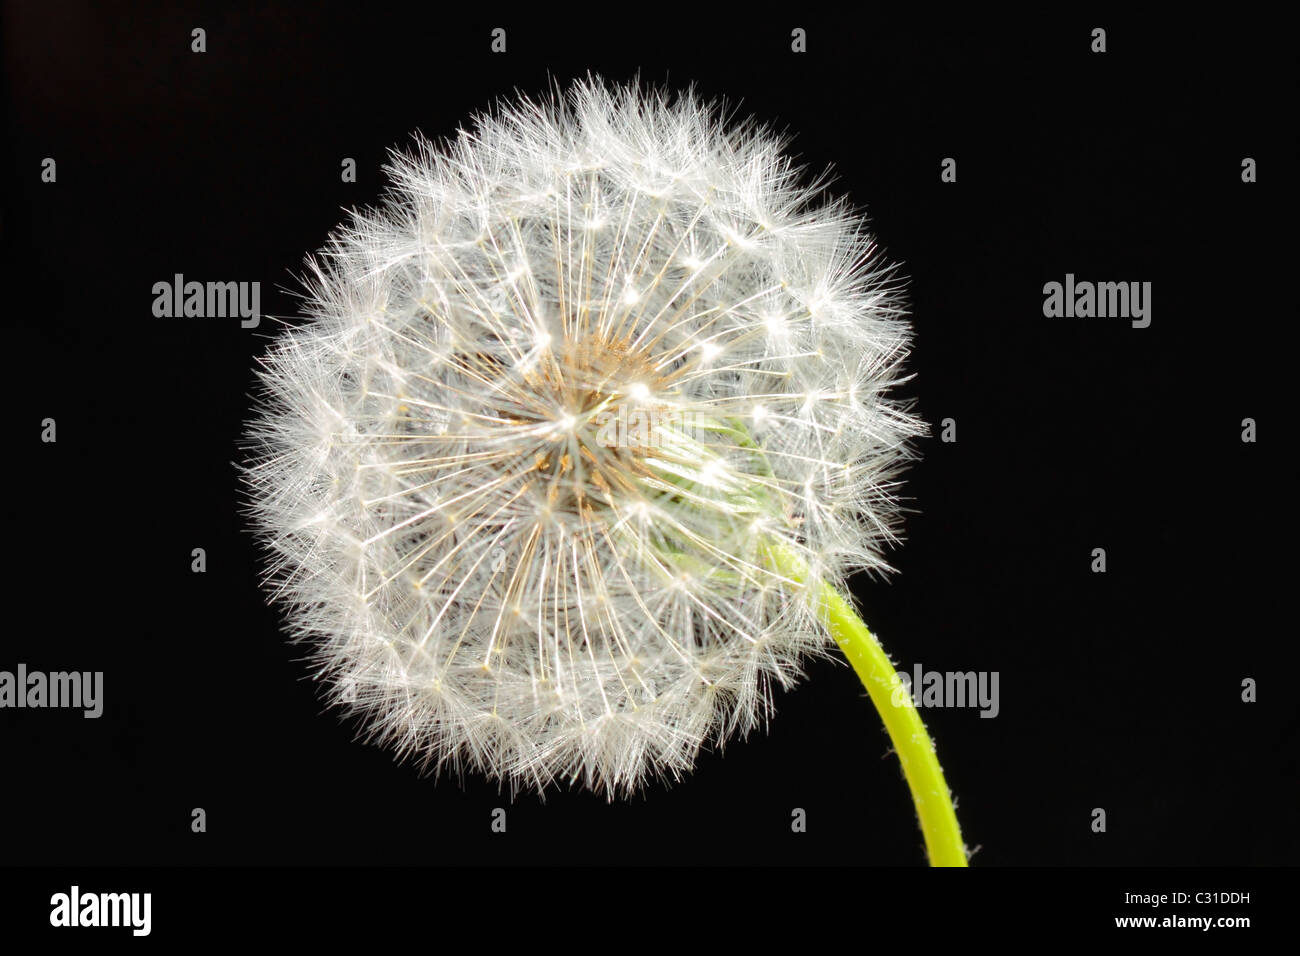 Dandelion seed head on black background Stock Photo